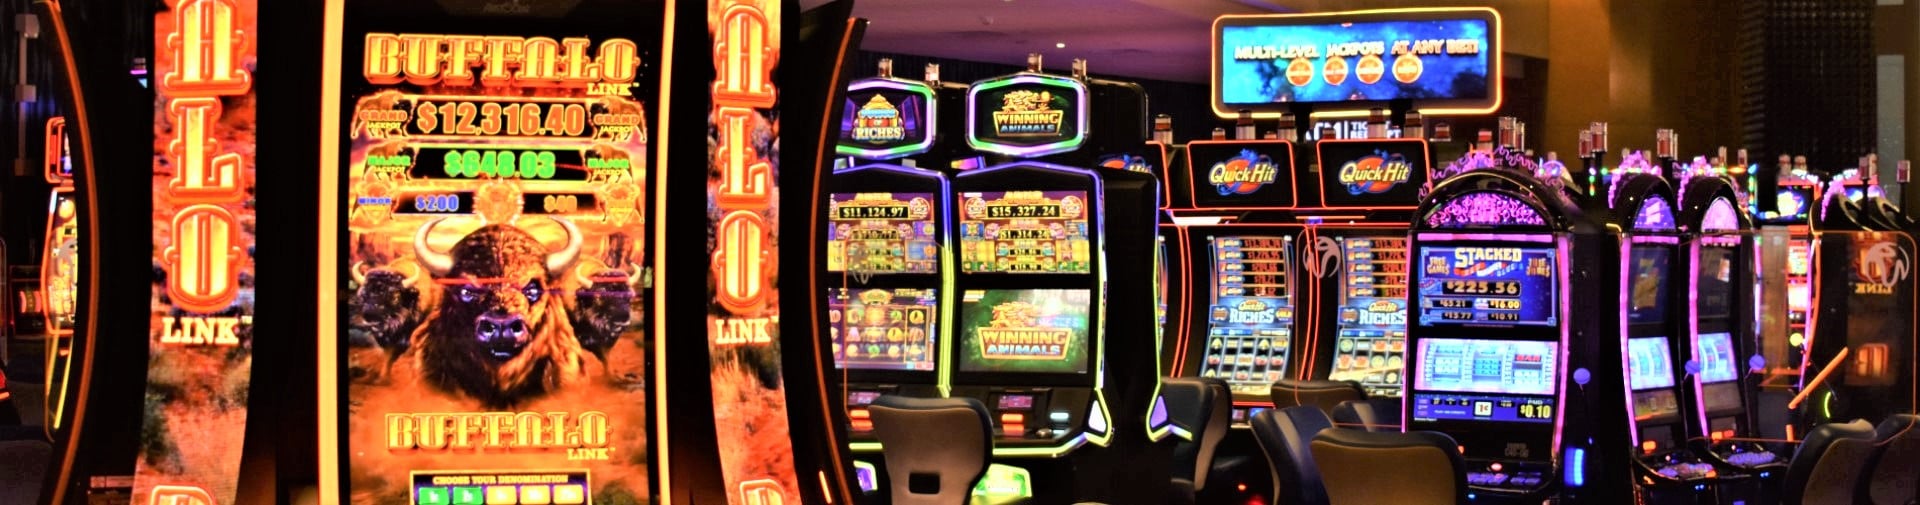 Play Slots | Slot Machines Near Me | Resorts World Catskills